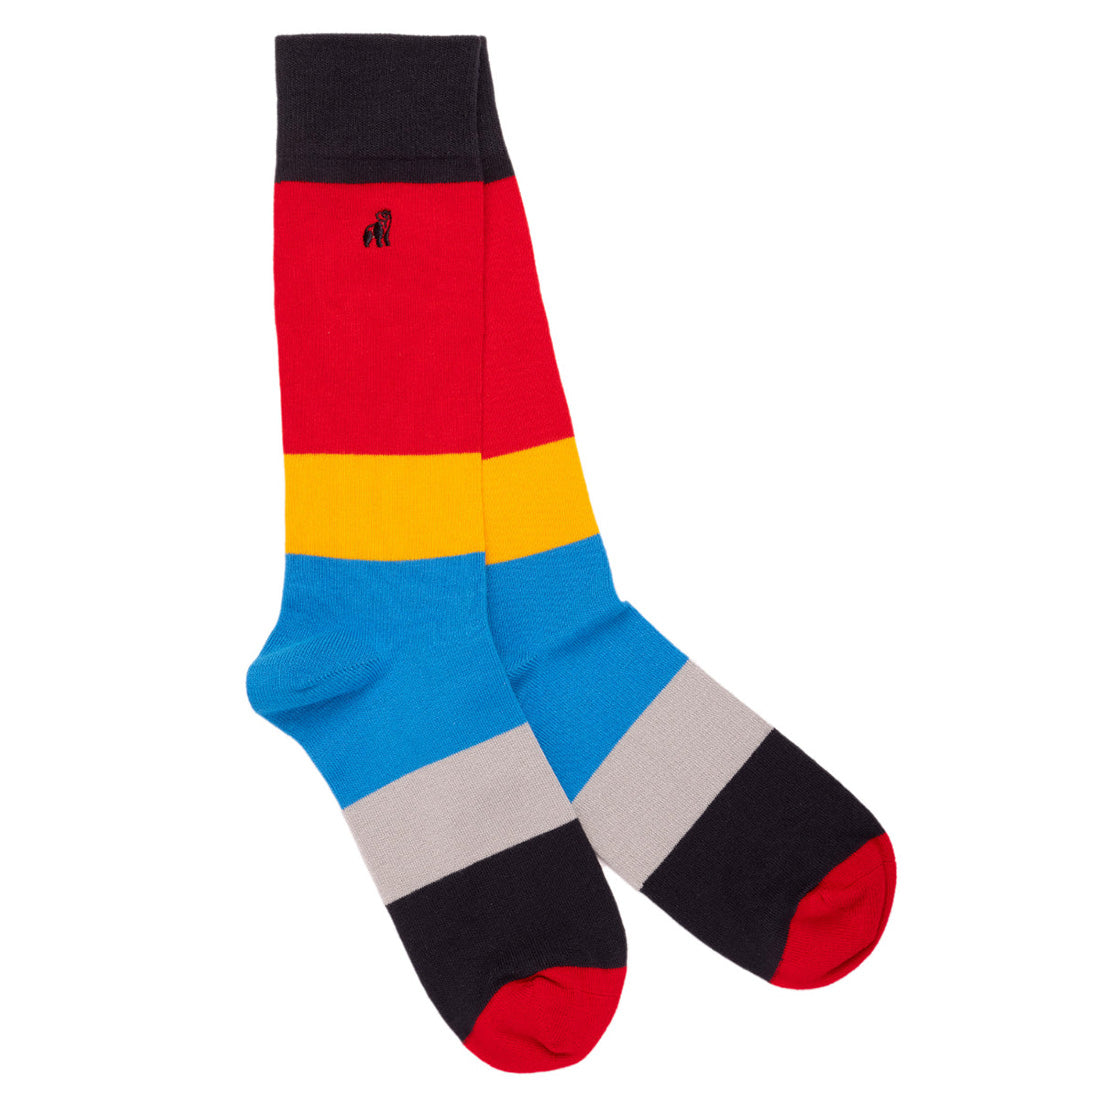 socks-red-large-striped-bamboo-socks-1_83e3ebfe-4e69-4fe8-8f27-88d3bf0cca98.jpg